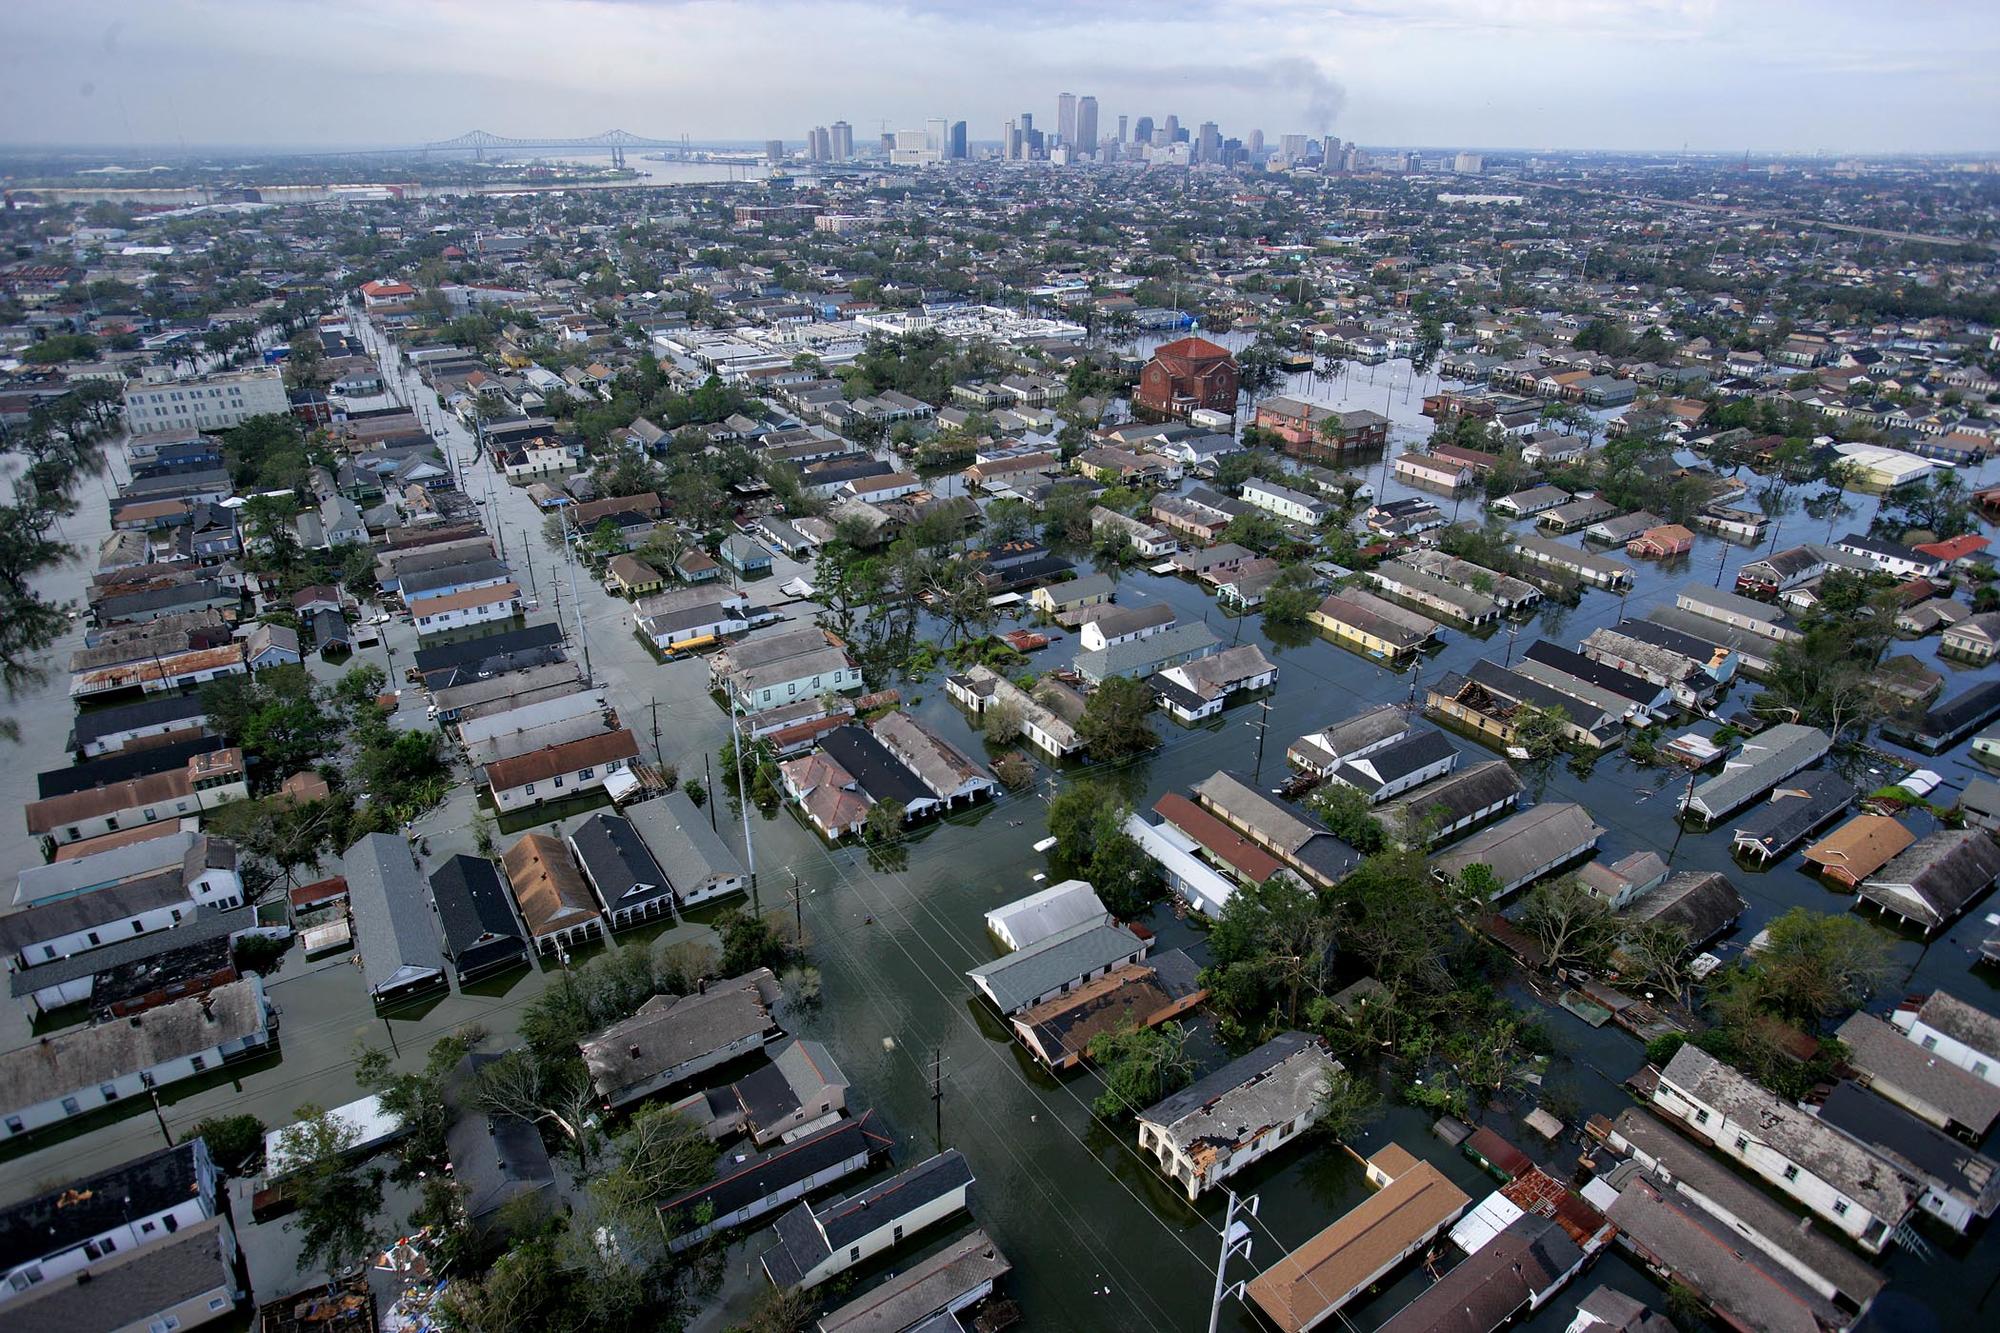 Hurricane Katrina devastation in New Orleans